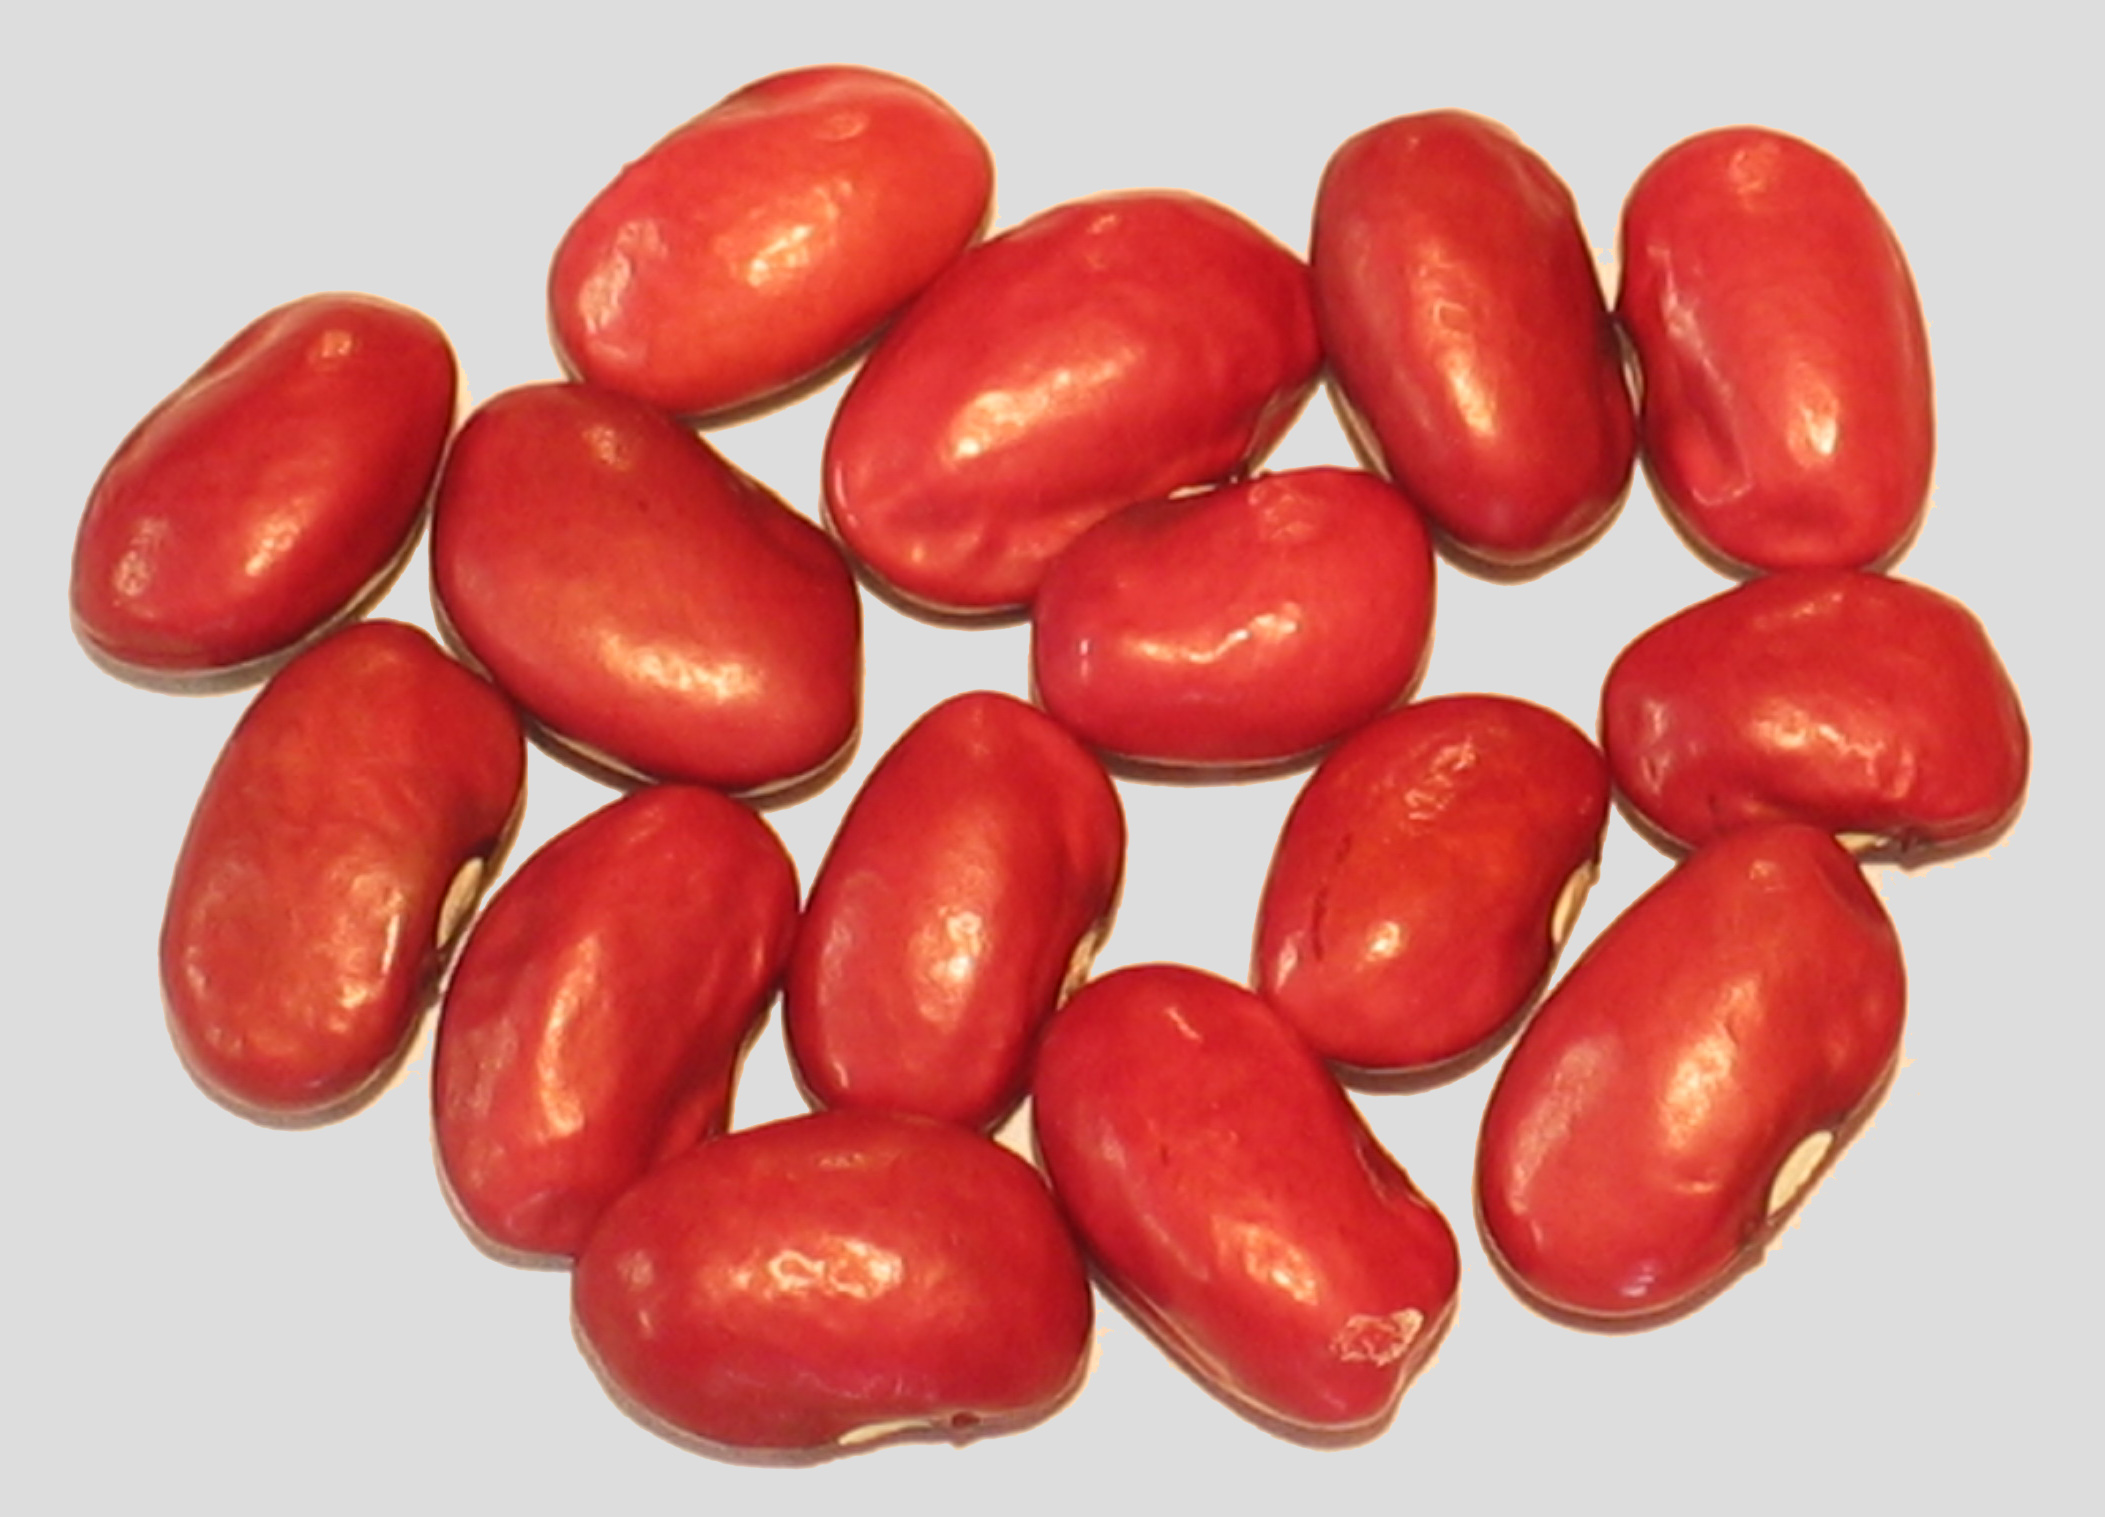 image of Hidatsa Red beans